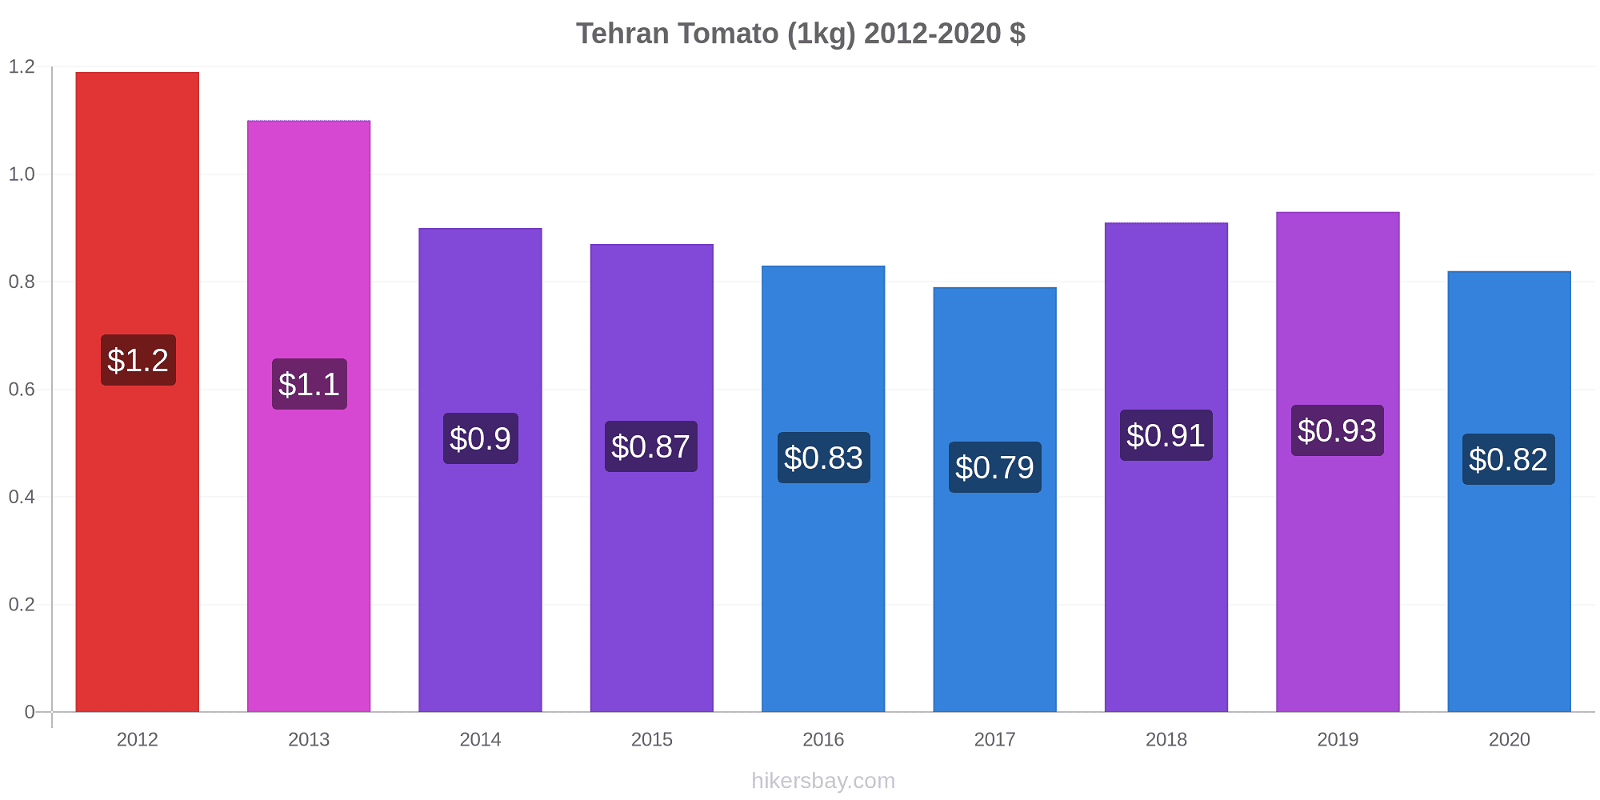 Tehran price changes Tomato (1kg) hikersbay.com